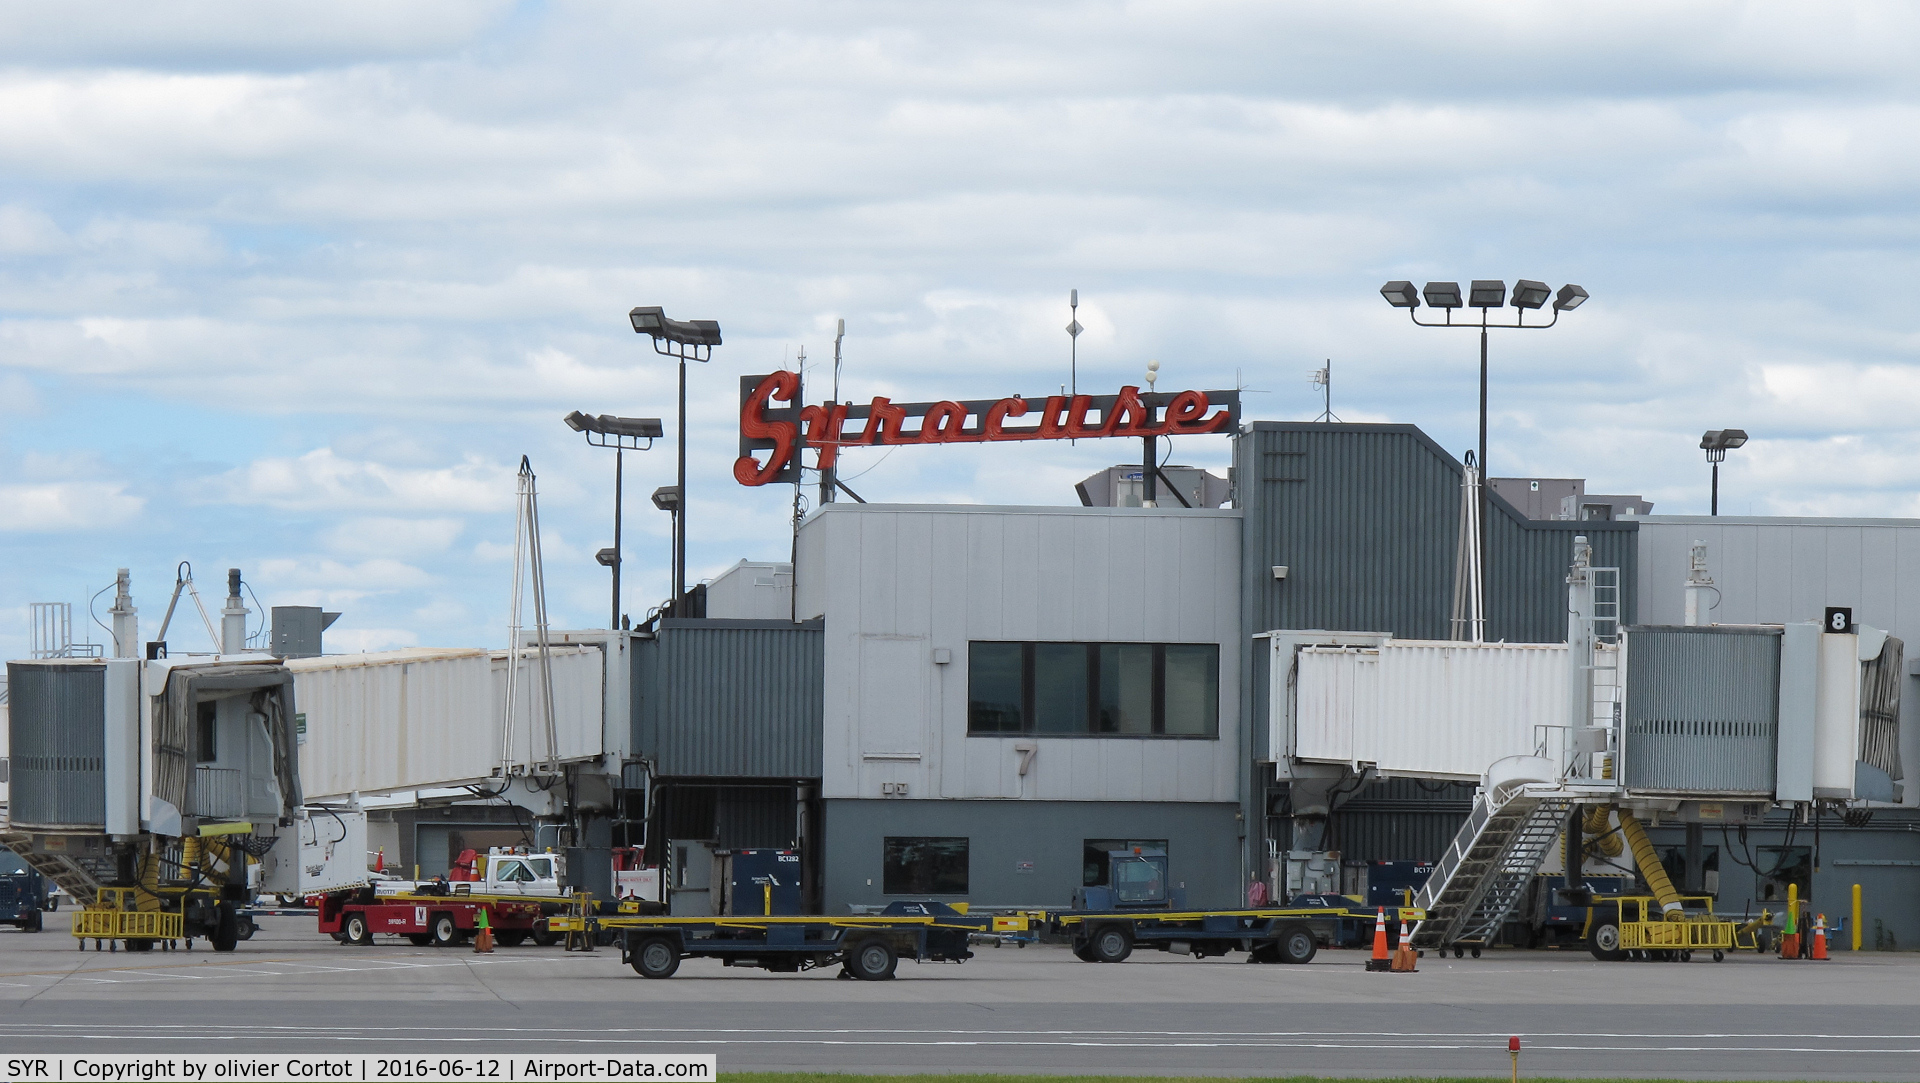 Syracuse Hancock International Airport (SYR) - the terminal